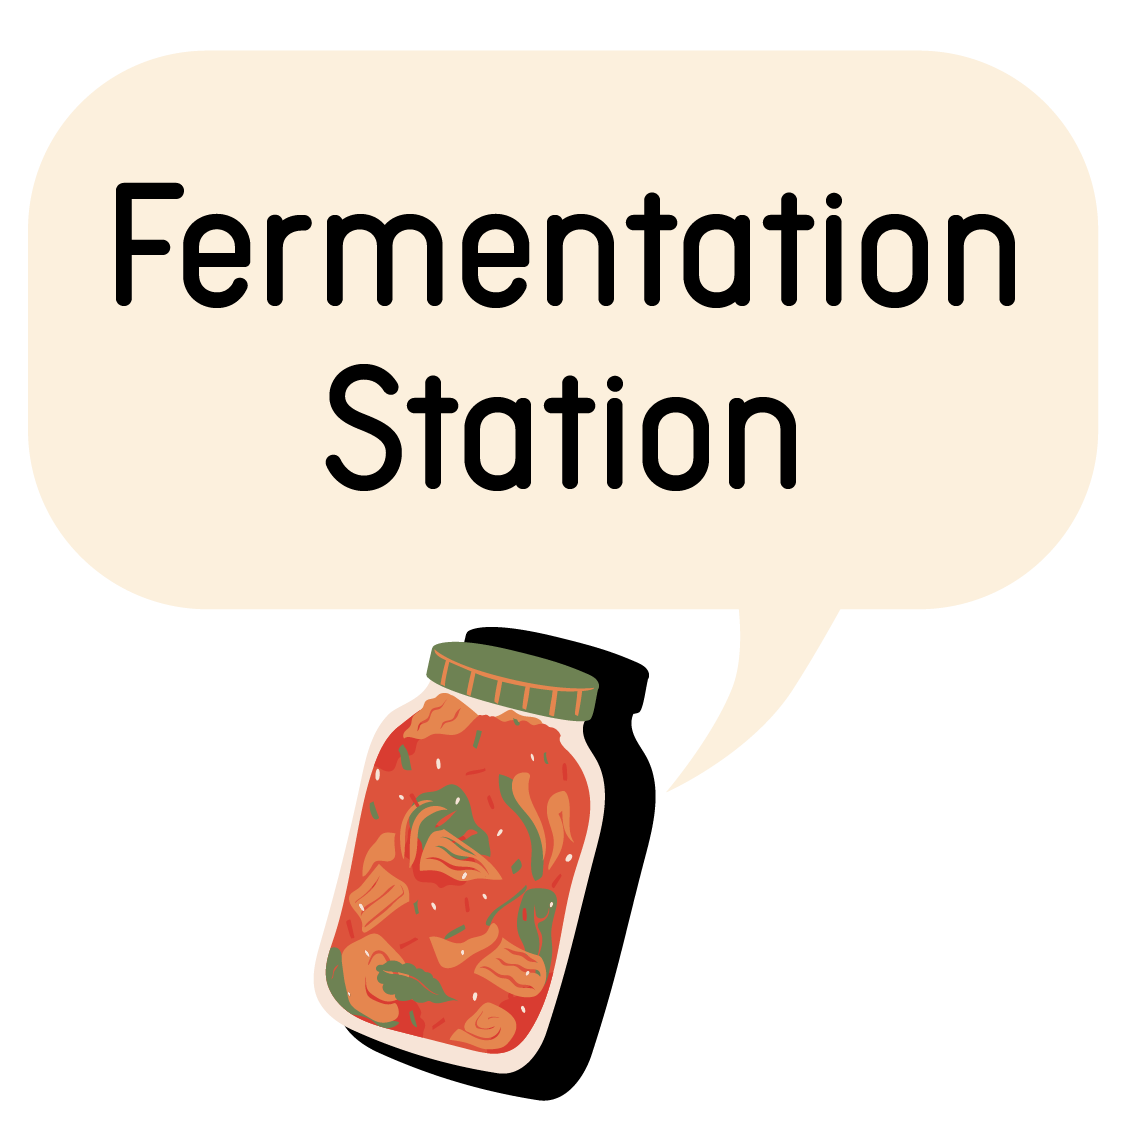 Fermentation Station button